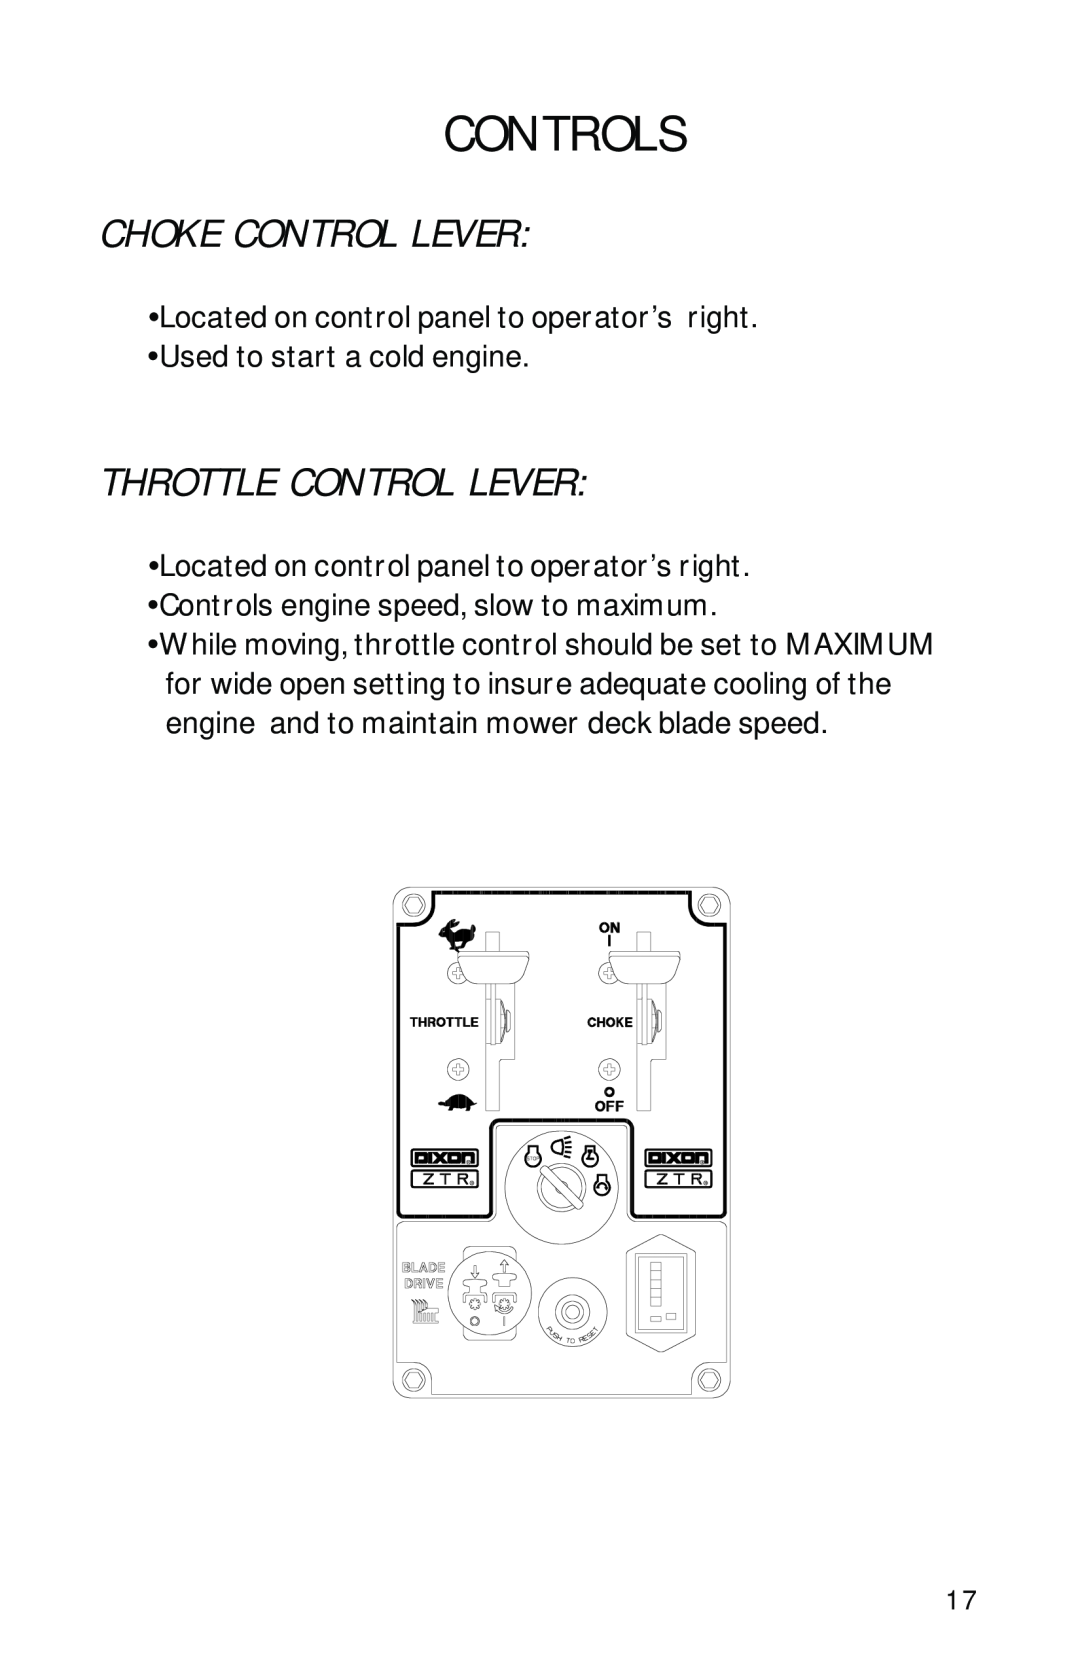 Dixon 1950-2300 Series manual Choke Control Lever, Throttle Control Lever, Controls 